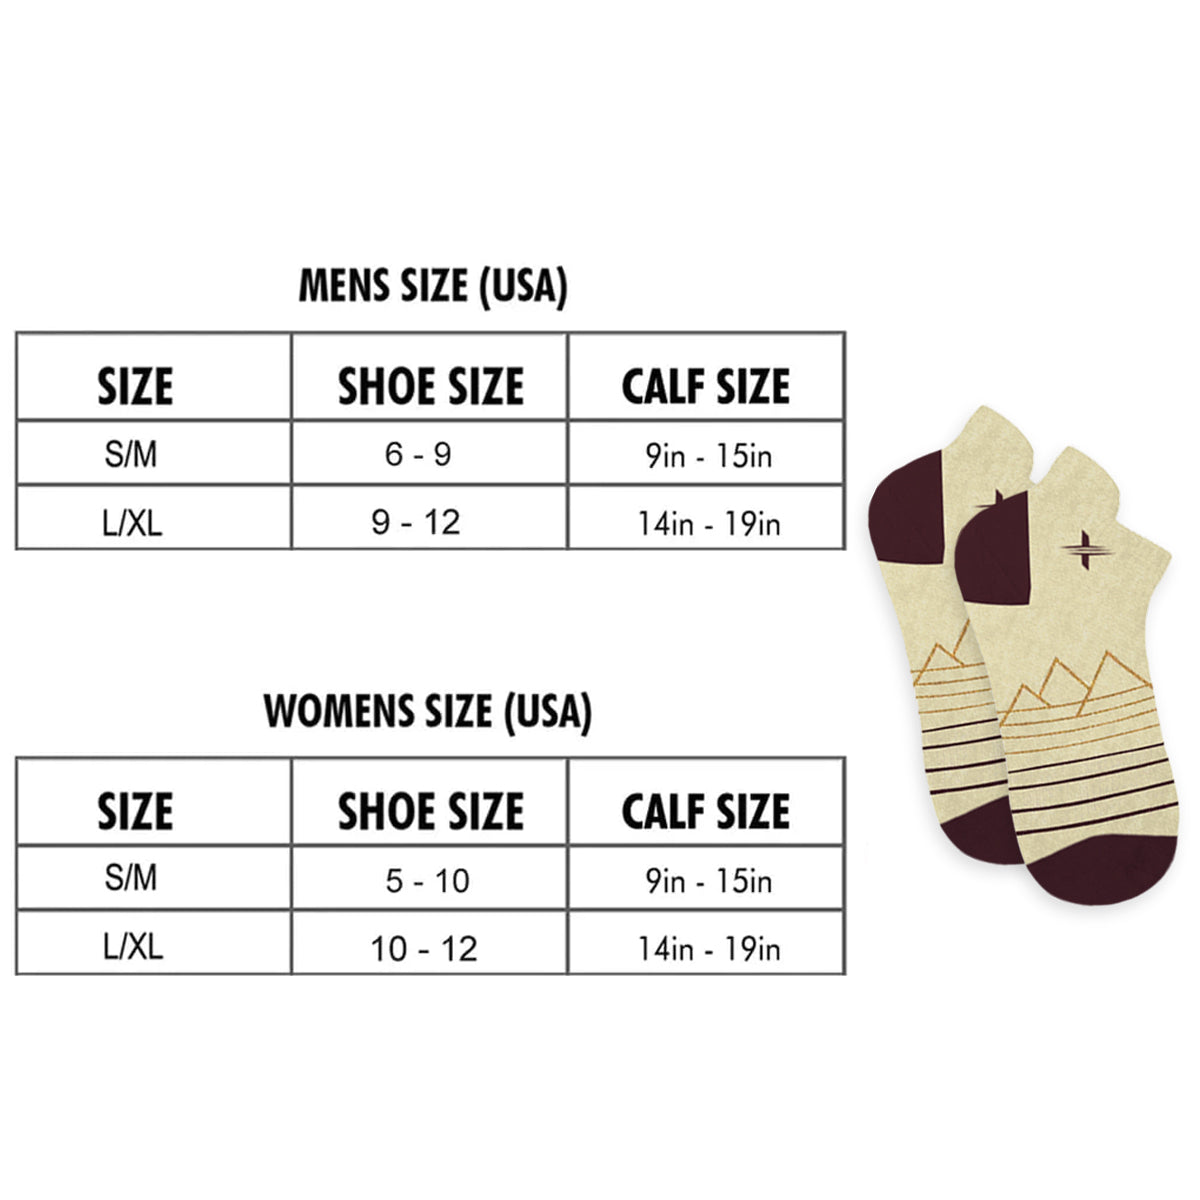 Merino Wool Warm Ankle Socks (3-Pack Assorted)